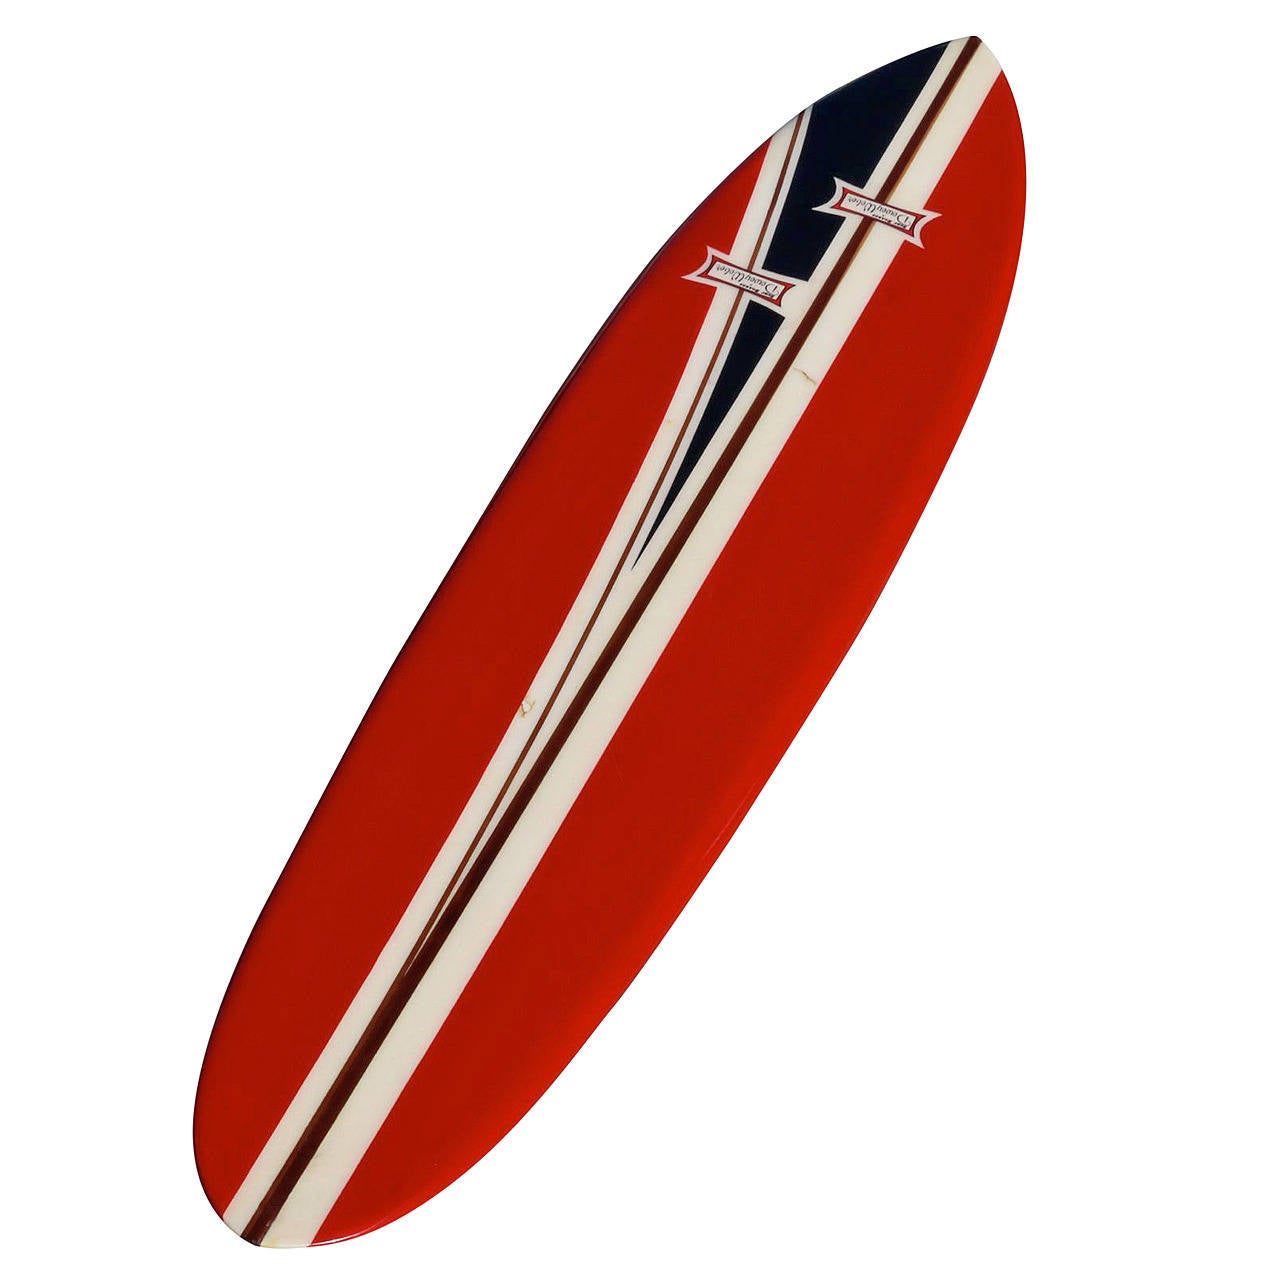 Dewey Weber double logo “PIG” surfboard, 1950s